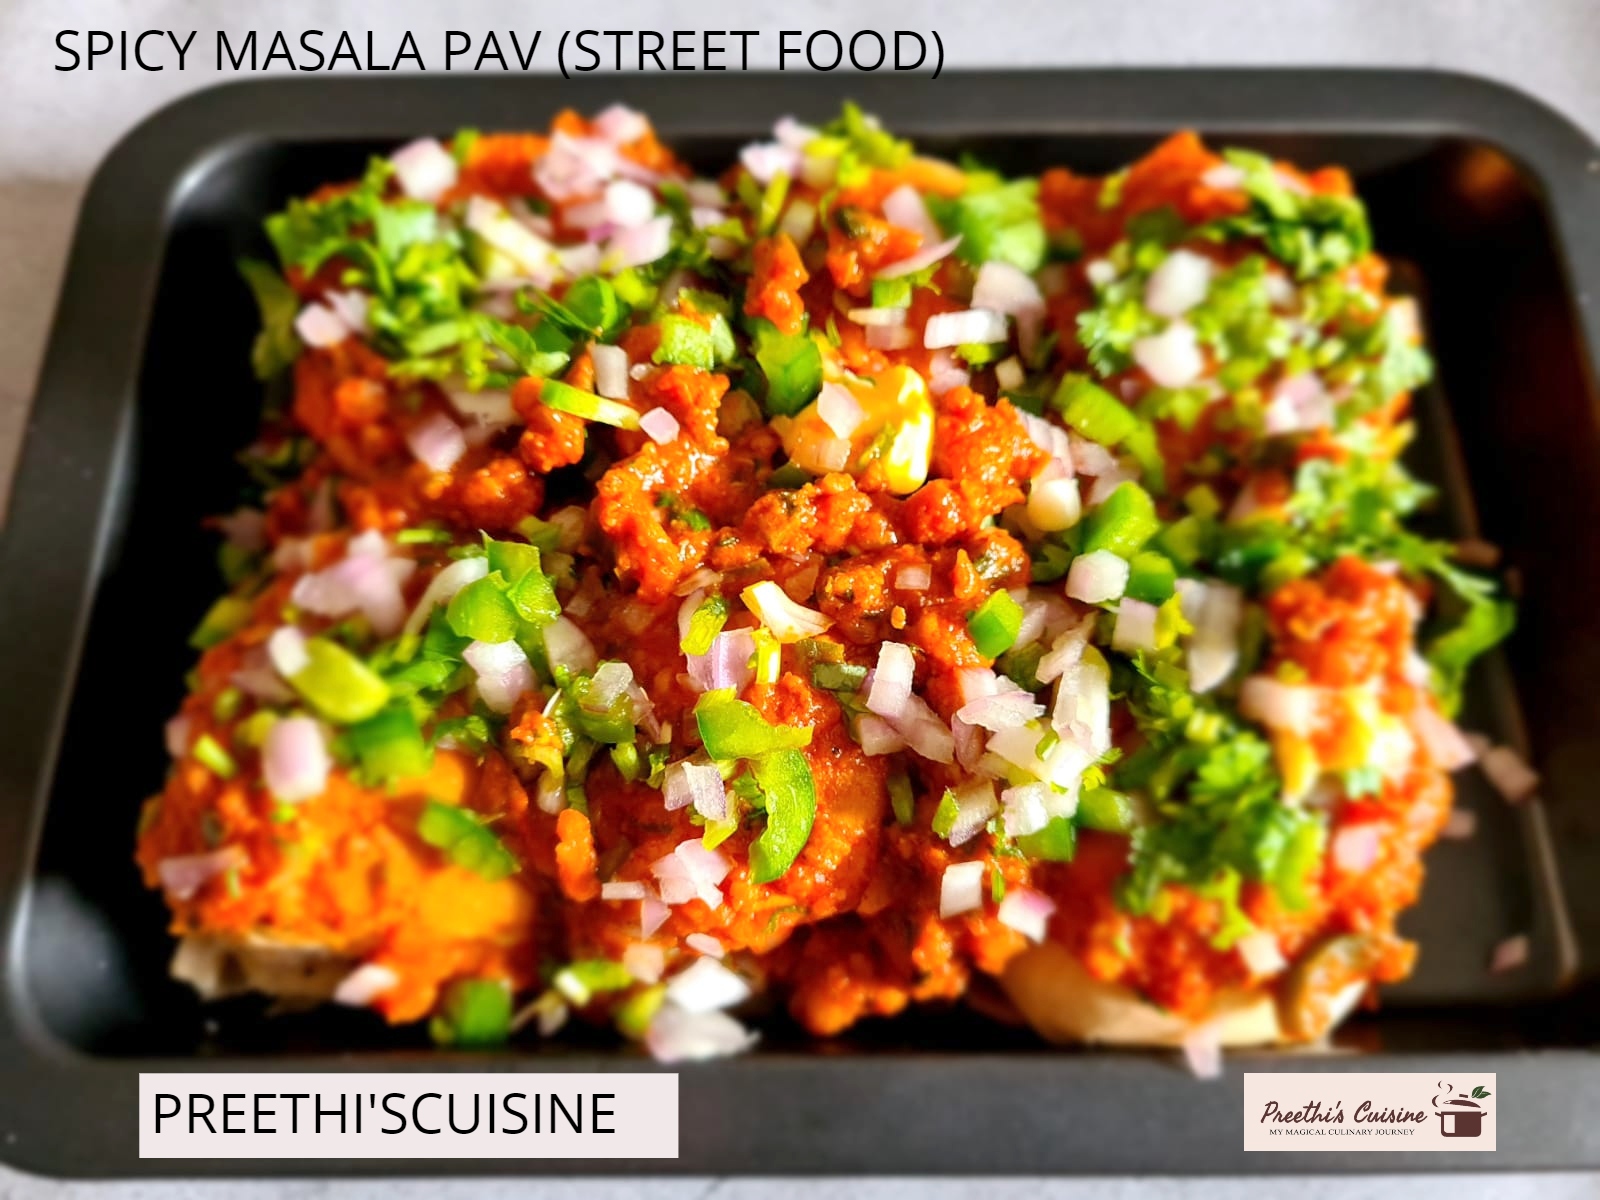 SPICE MASALA PAV (STREET FOOD)